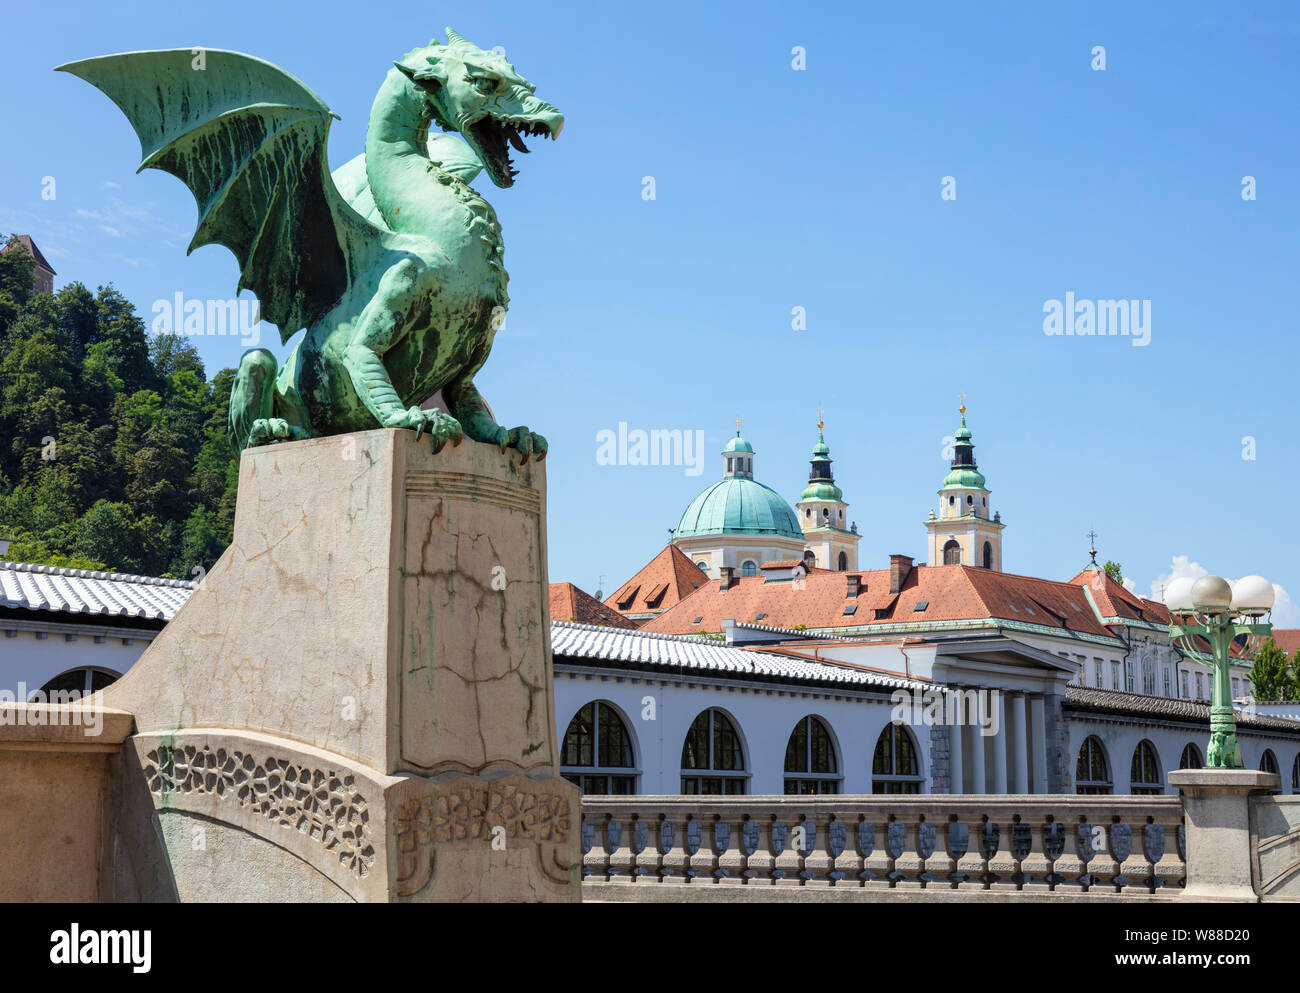 Dragon Bridge dragon statue on the Dragon bridge Zmajski most in front of the Ljubljana Cathedral  and central market Ljubljana Slovenia Eu Europe Stock Photo